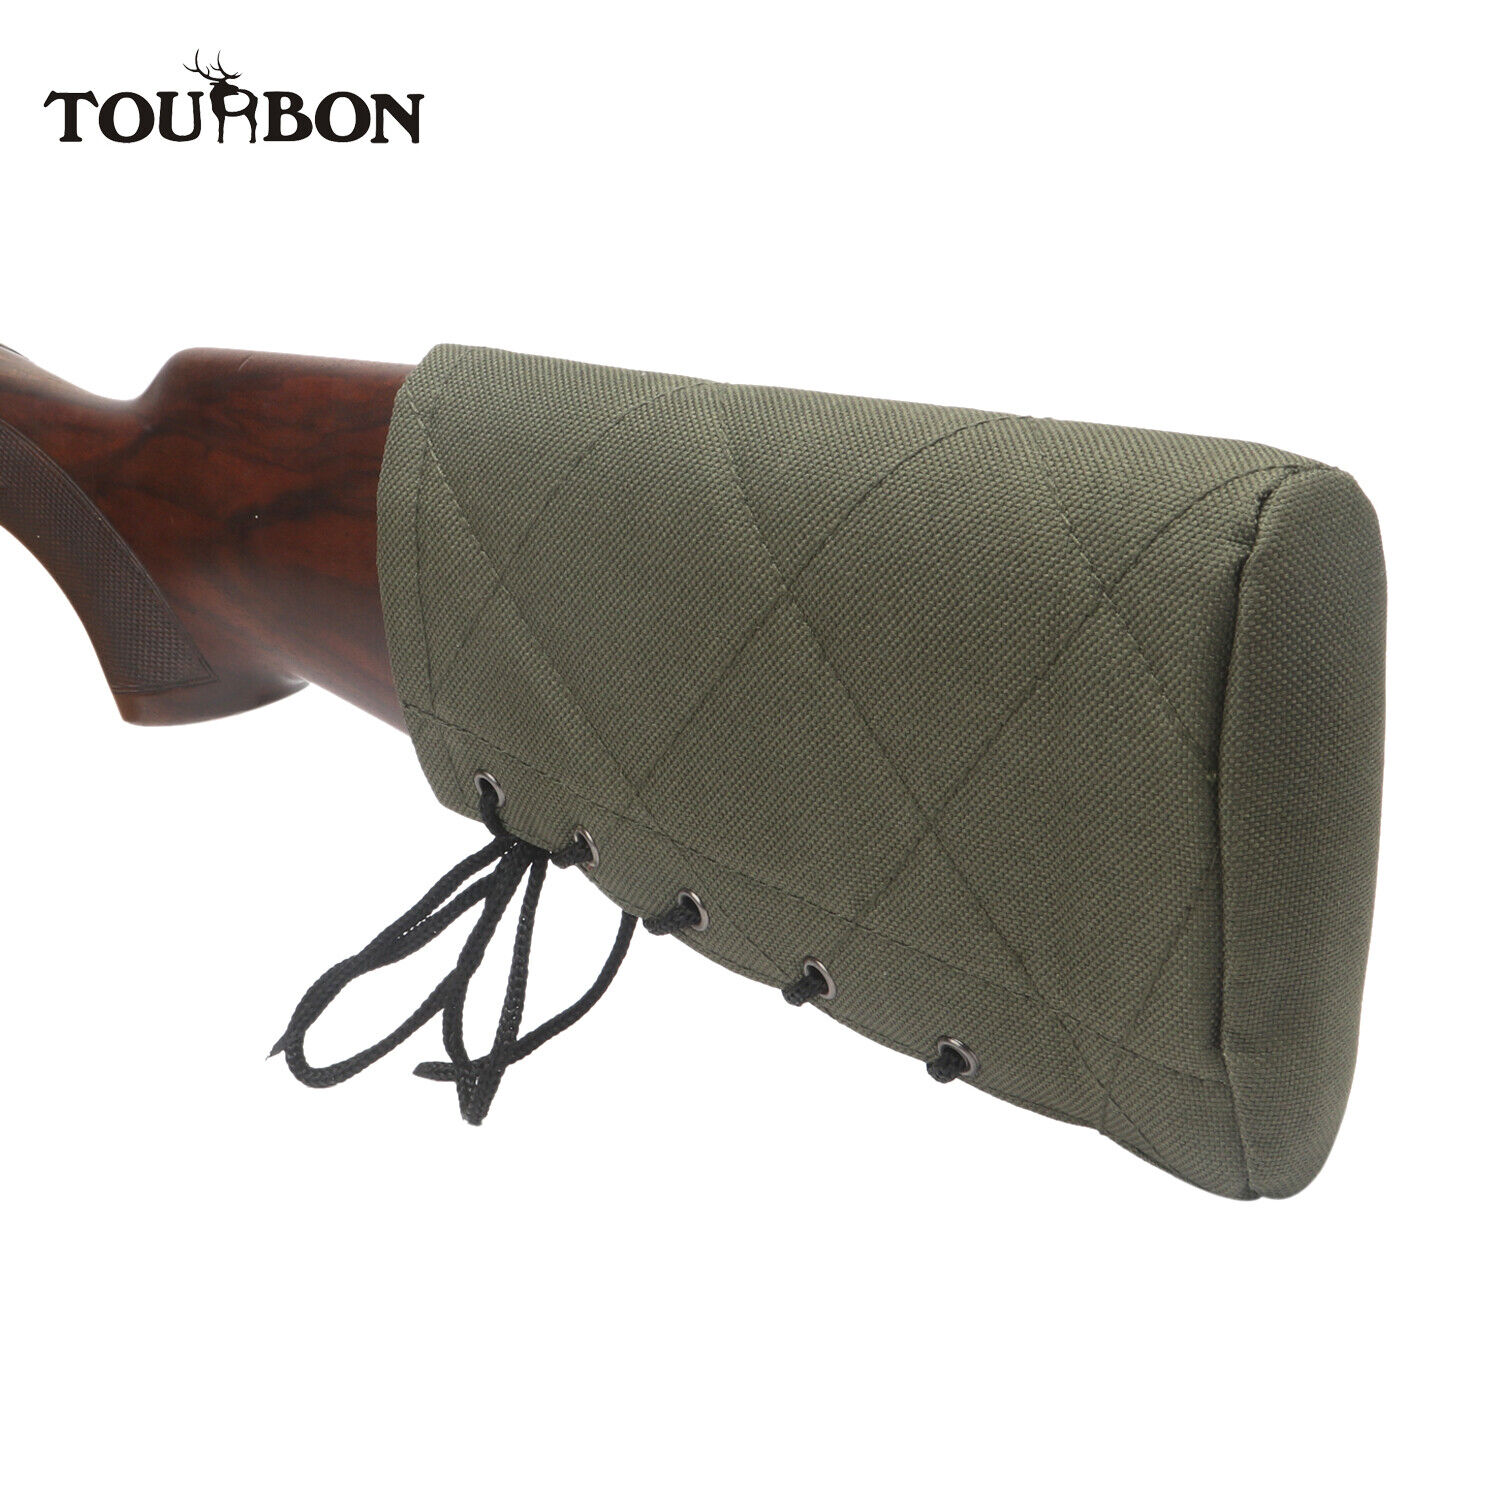 TOURBON Hunting Adjustable Gun Buttstock Cover Shotgun Stock Recoil Pad Green